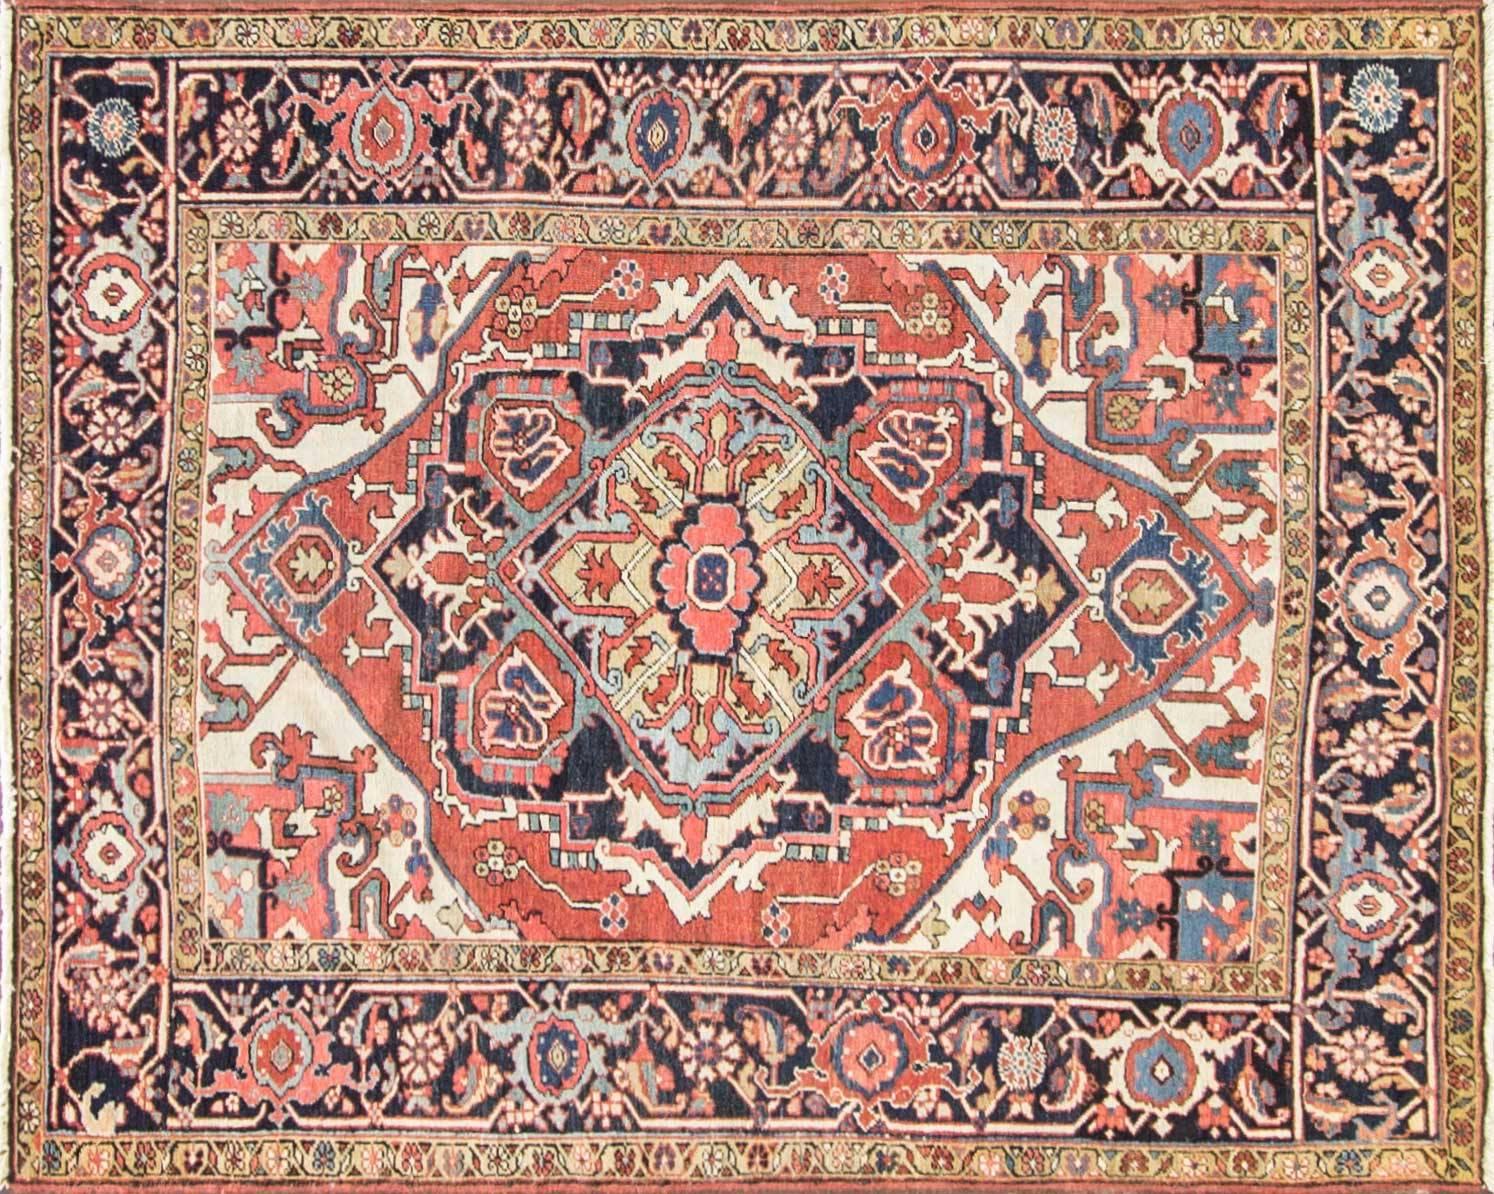 Exquisite and timeless, this Antique Persian Serapi rug, circa 1900, measures 4'11